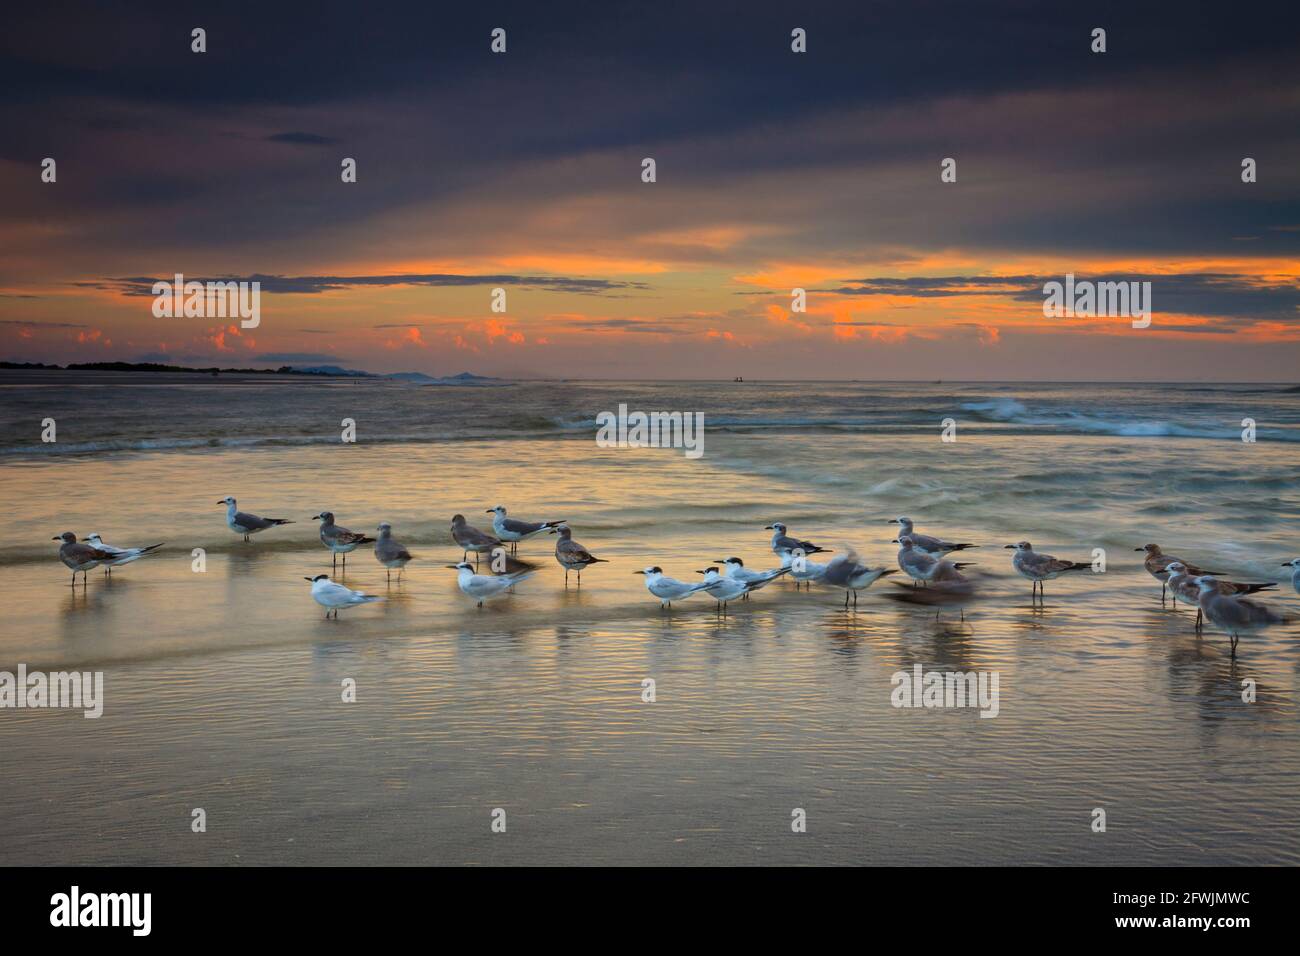 Shorebirds on the beach at sunrise at Punta Chame, Pacific coast, Panama province, Republic of Panama, Central America. Stock Photo